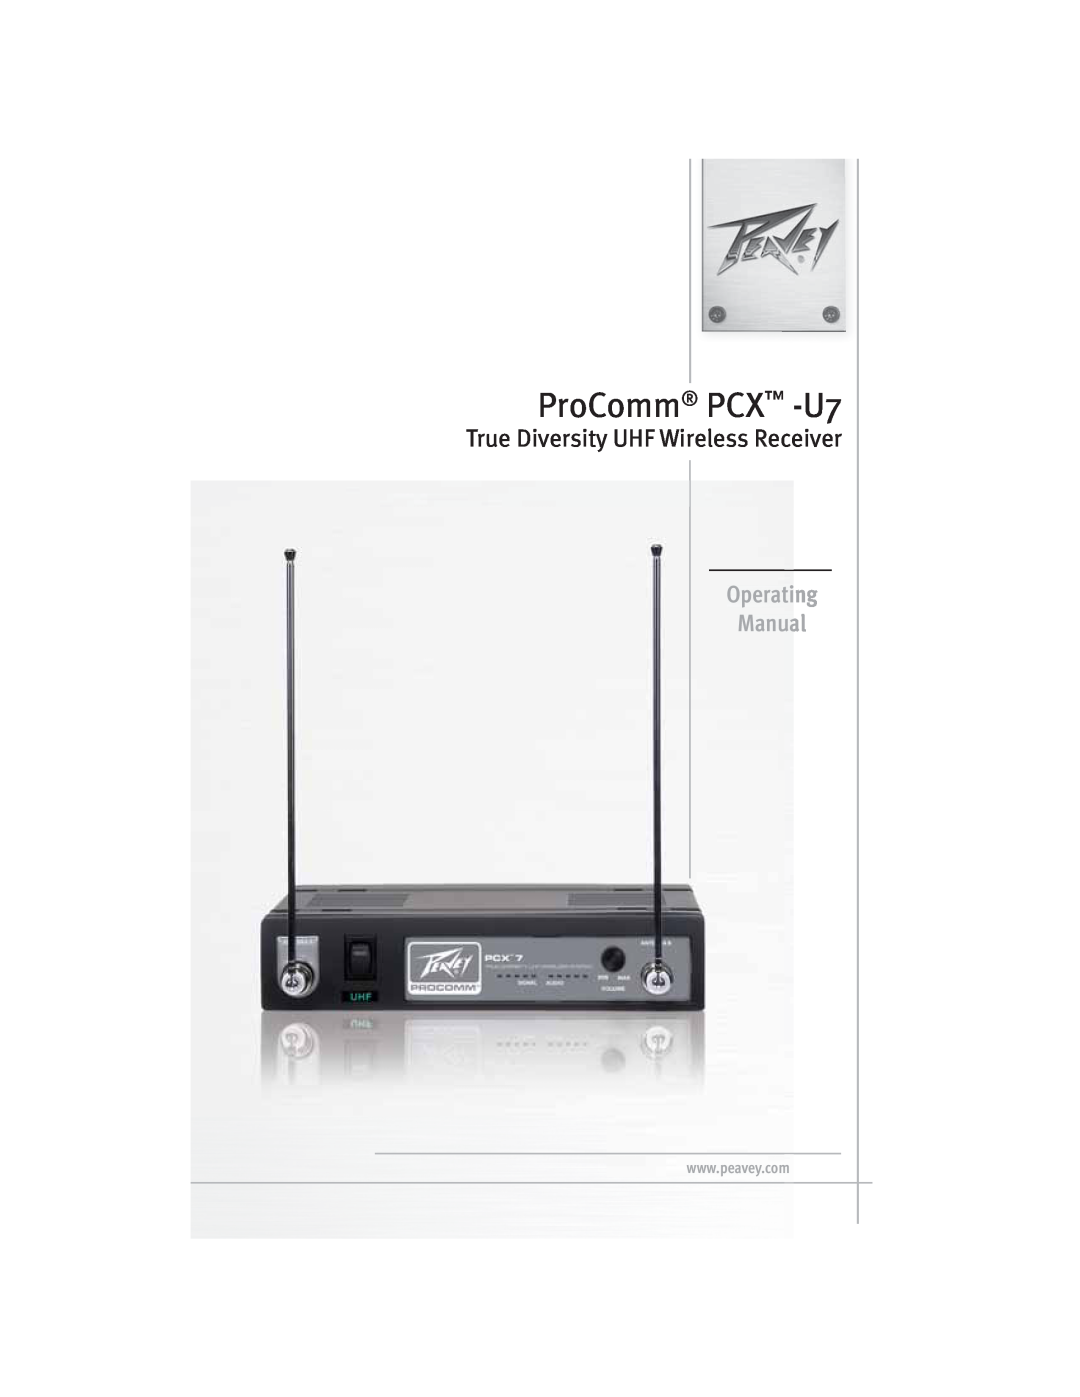 Peavey manual ProComm PCX -U7, True Diversity UHF Wireless Receiver, Operating Manual 